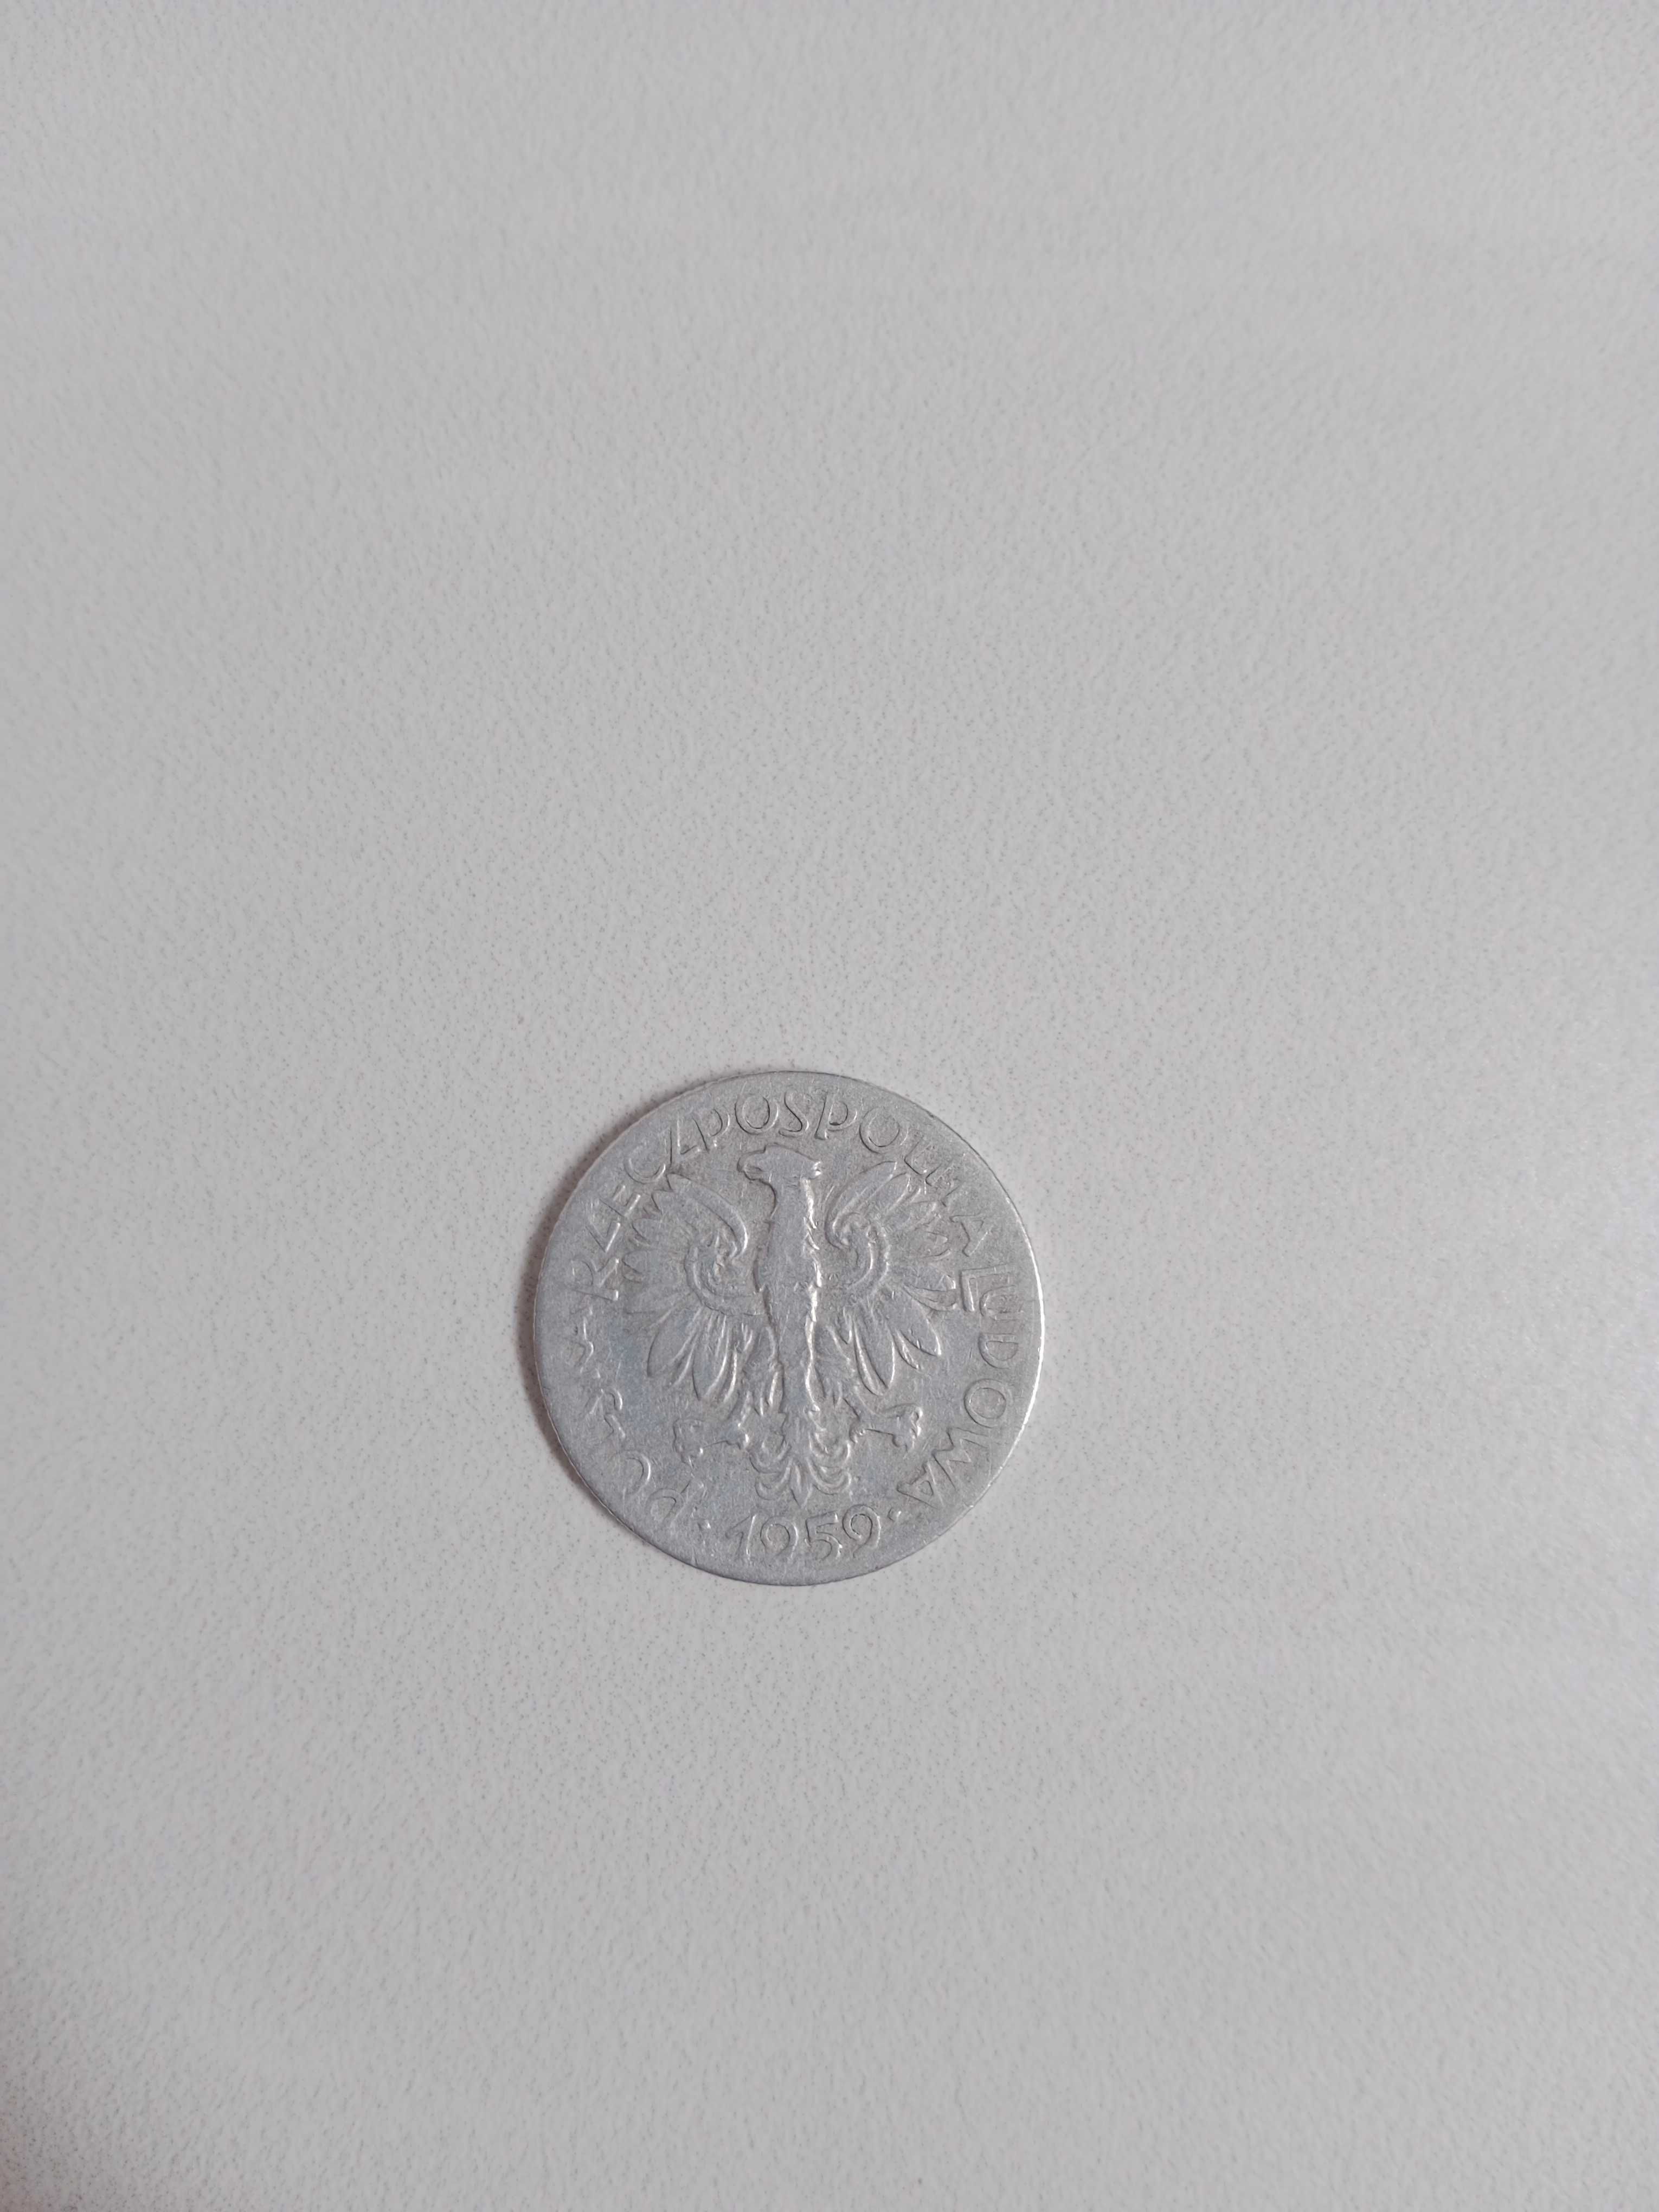 Moneta 5zł z 1959 roku.